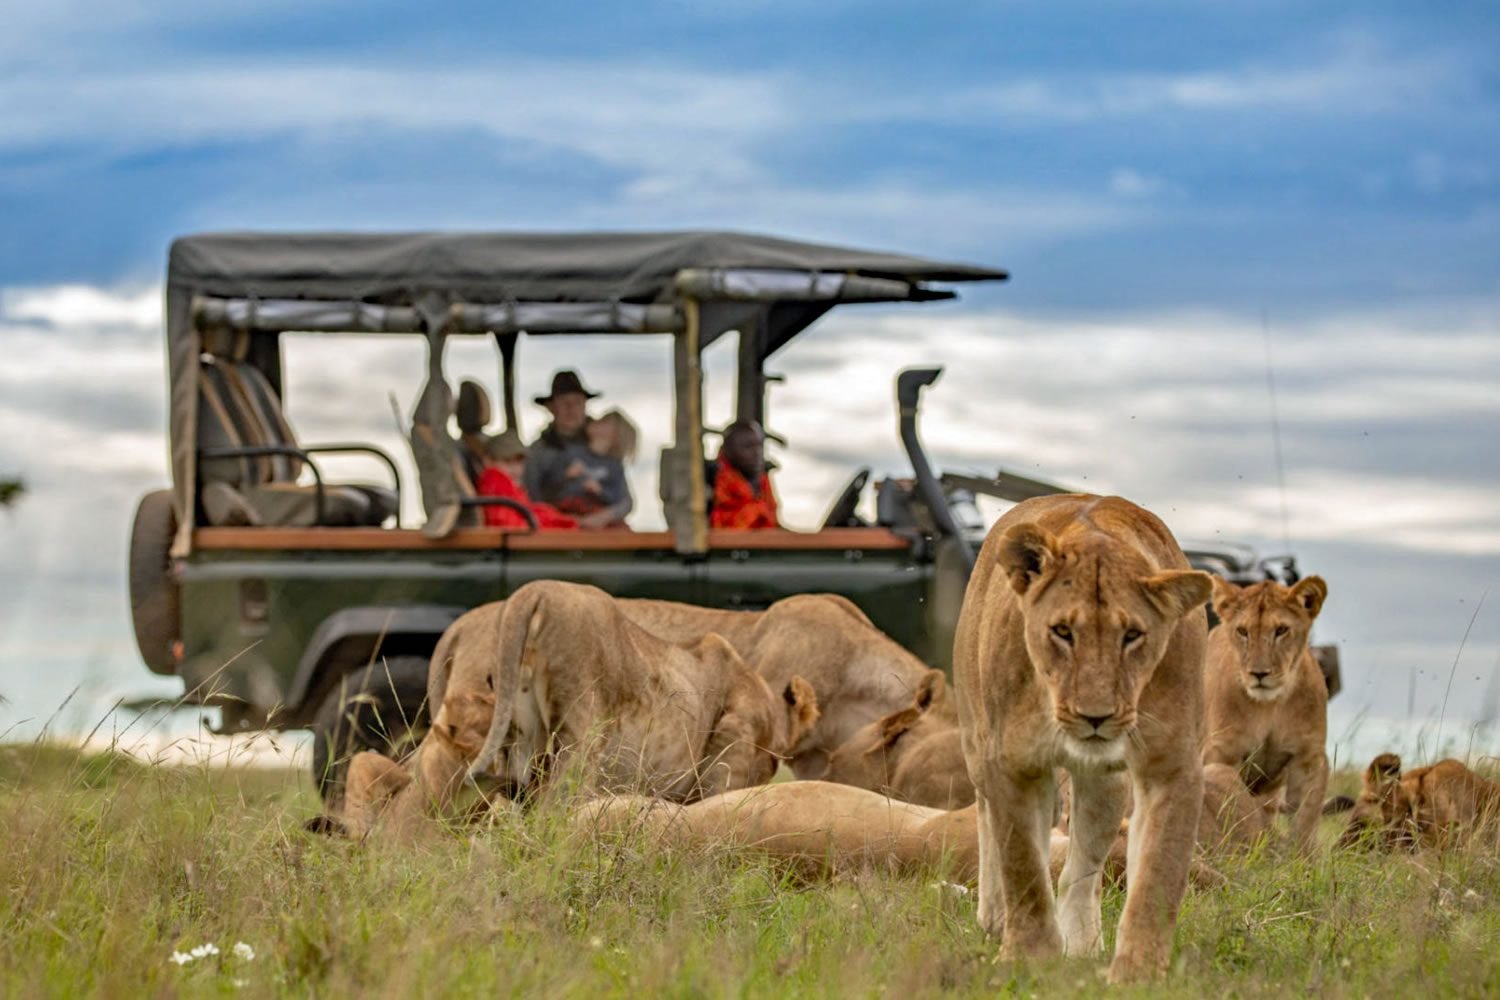 safari villa homes